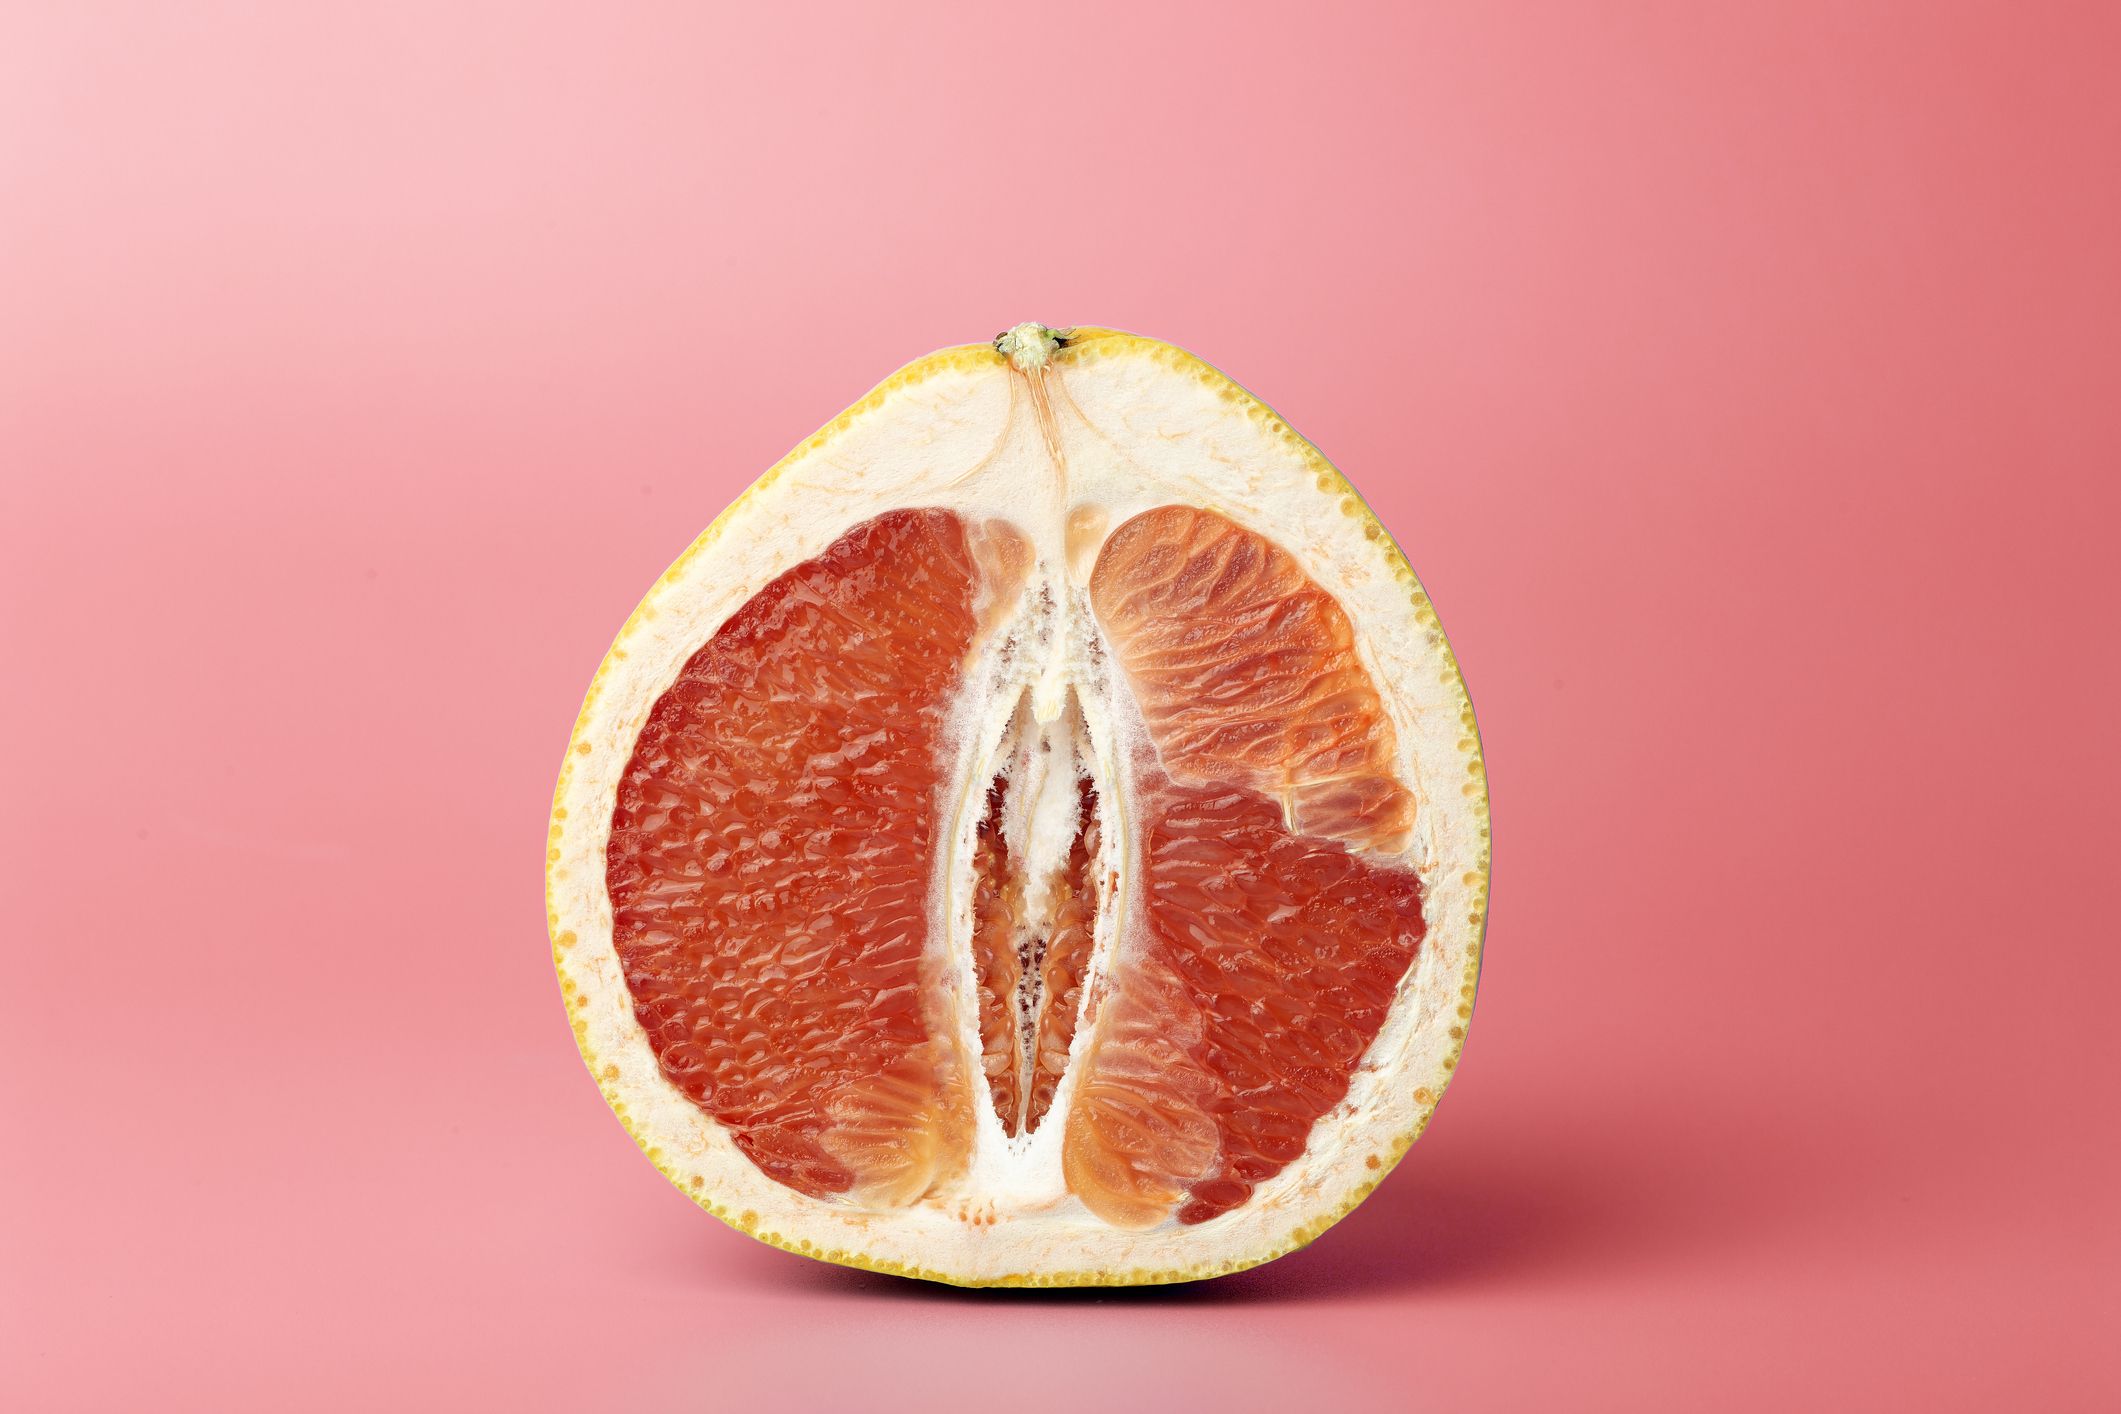 grapefruit minimal erotic concept half a juicy royalty free image 1658087128.jpg?crop\u003d0